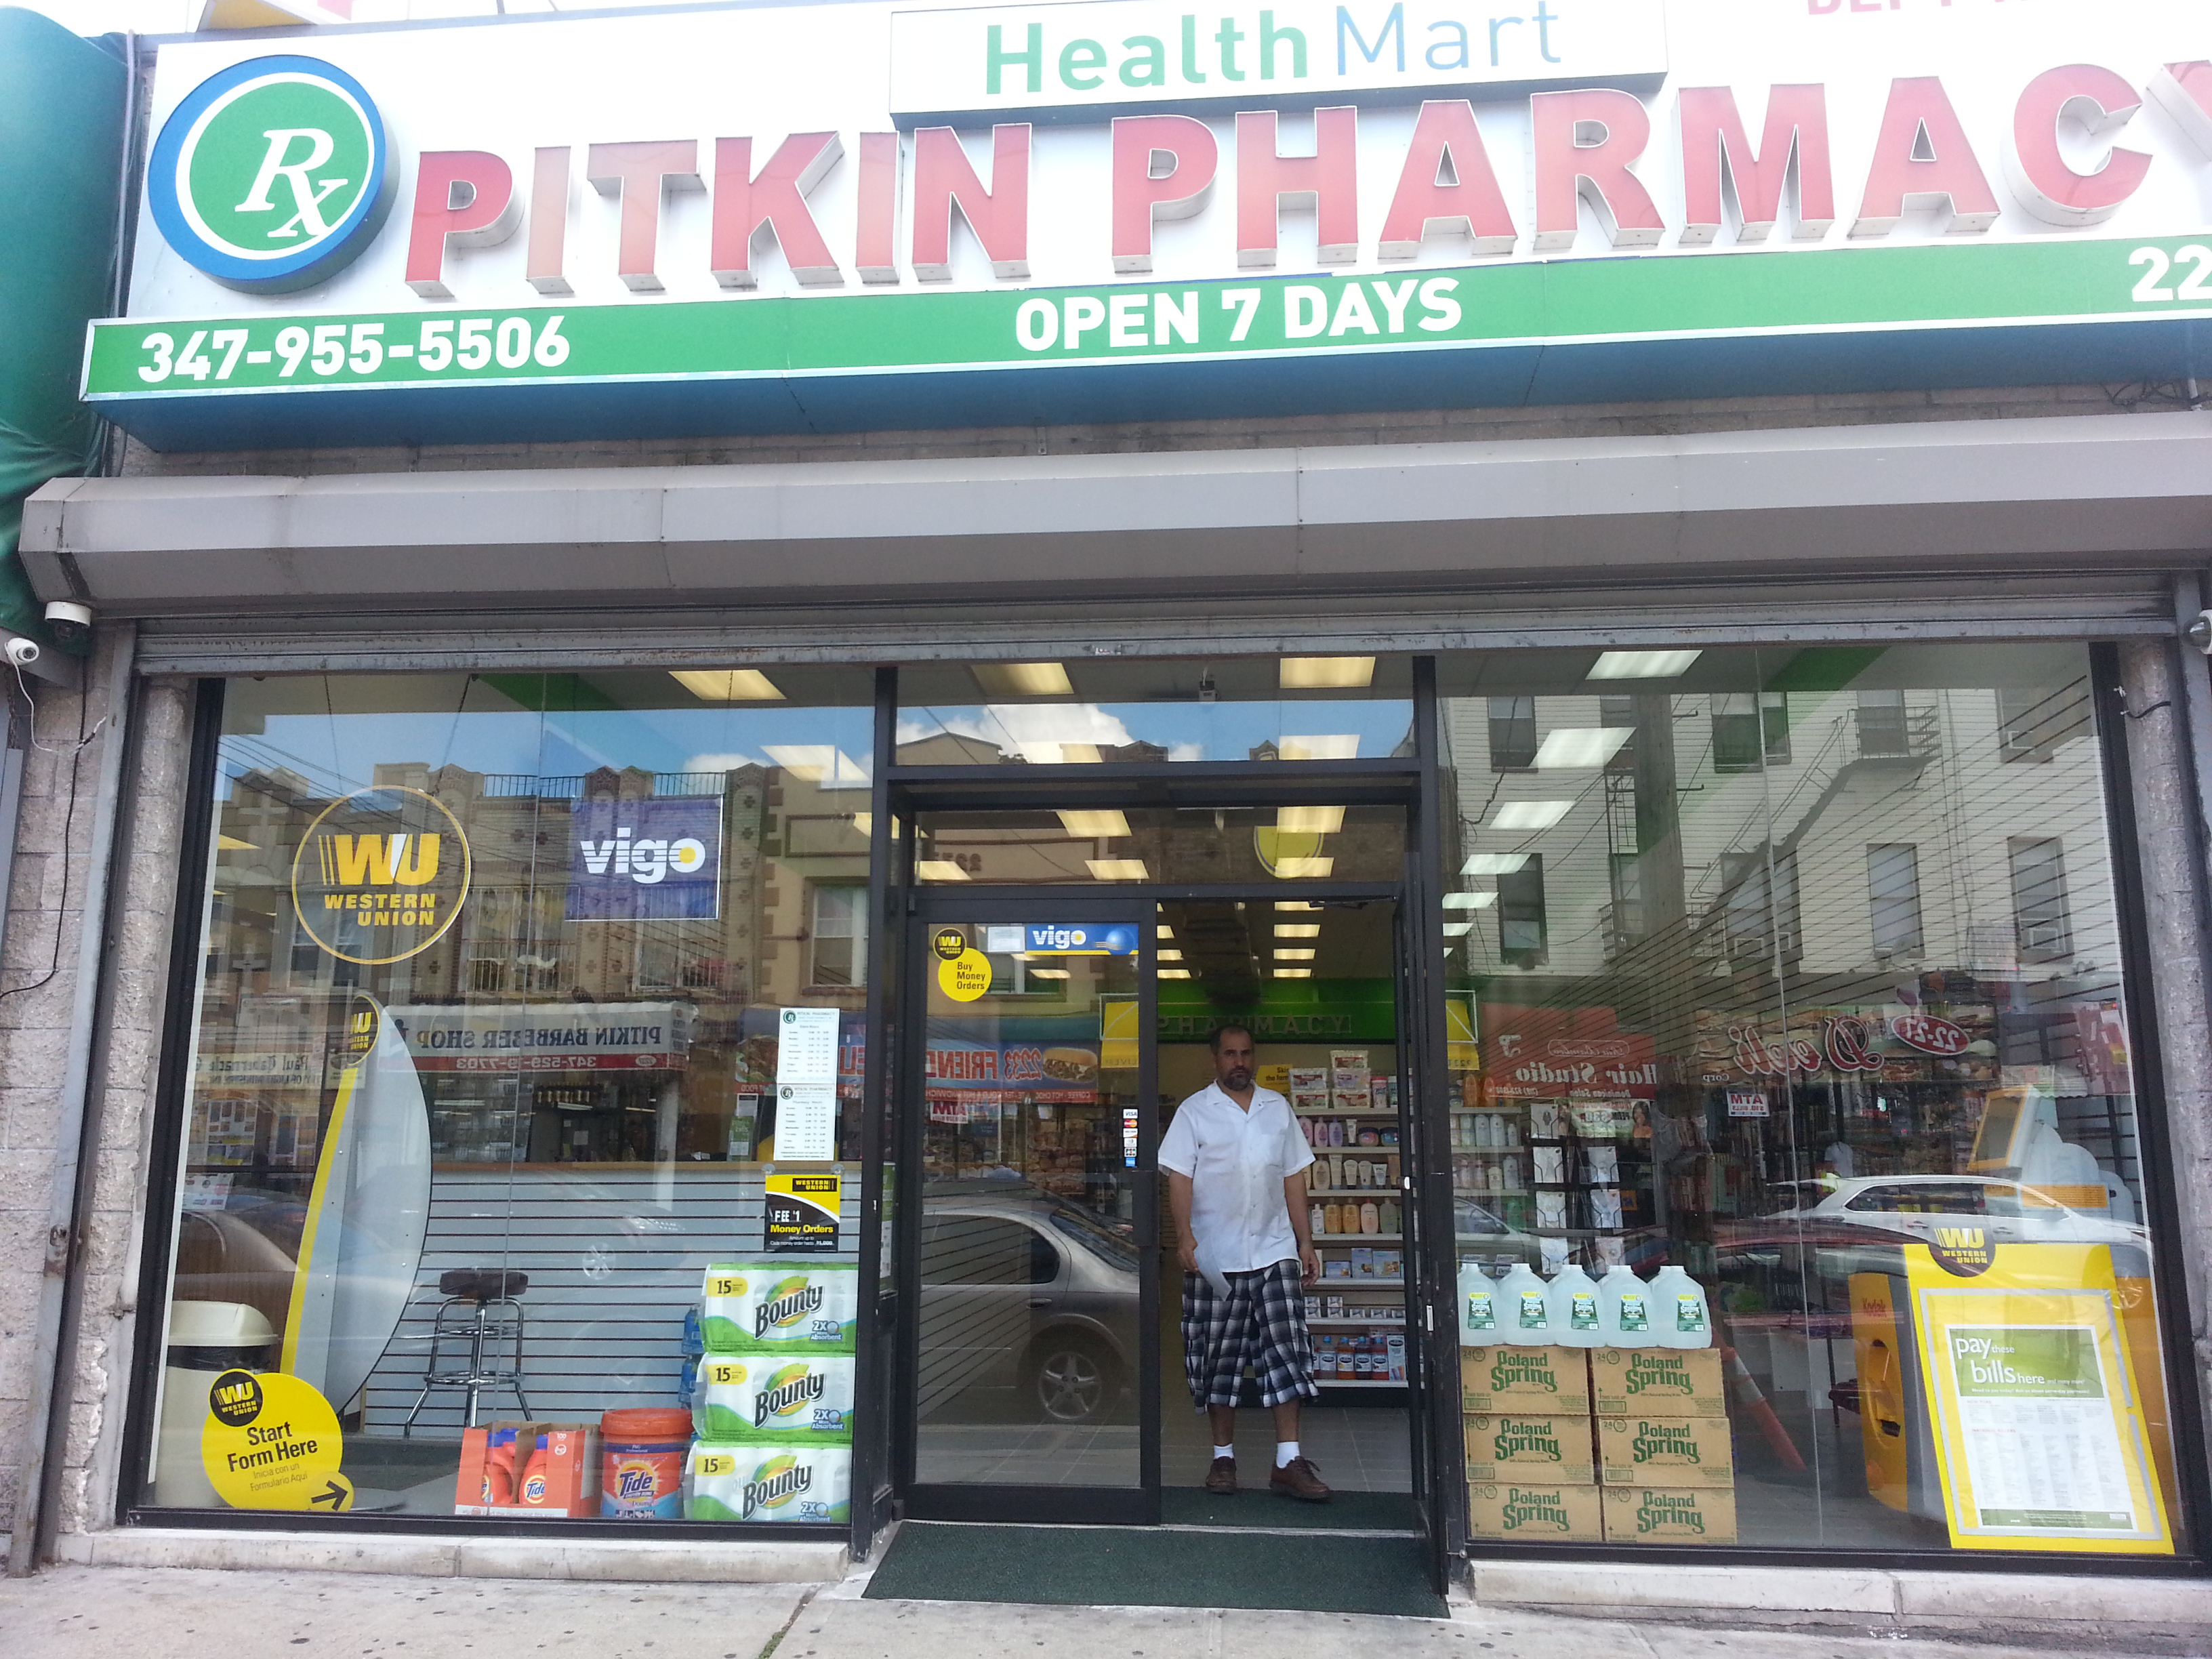 Health Mart Pharmacy Locations - gusevdesign